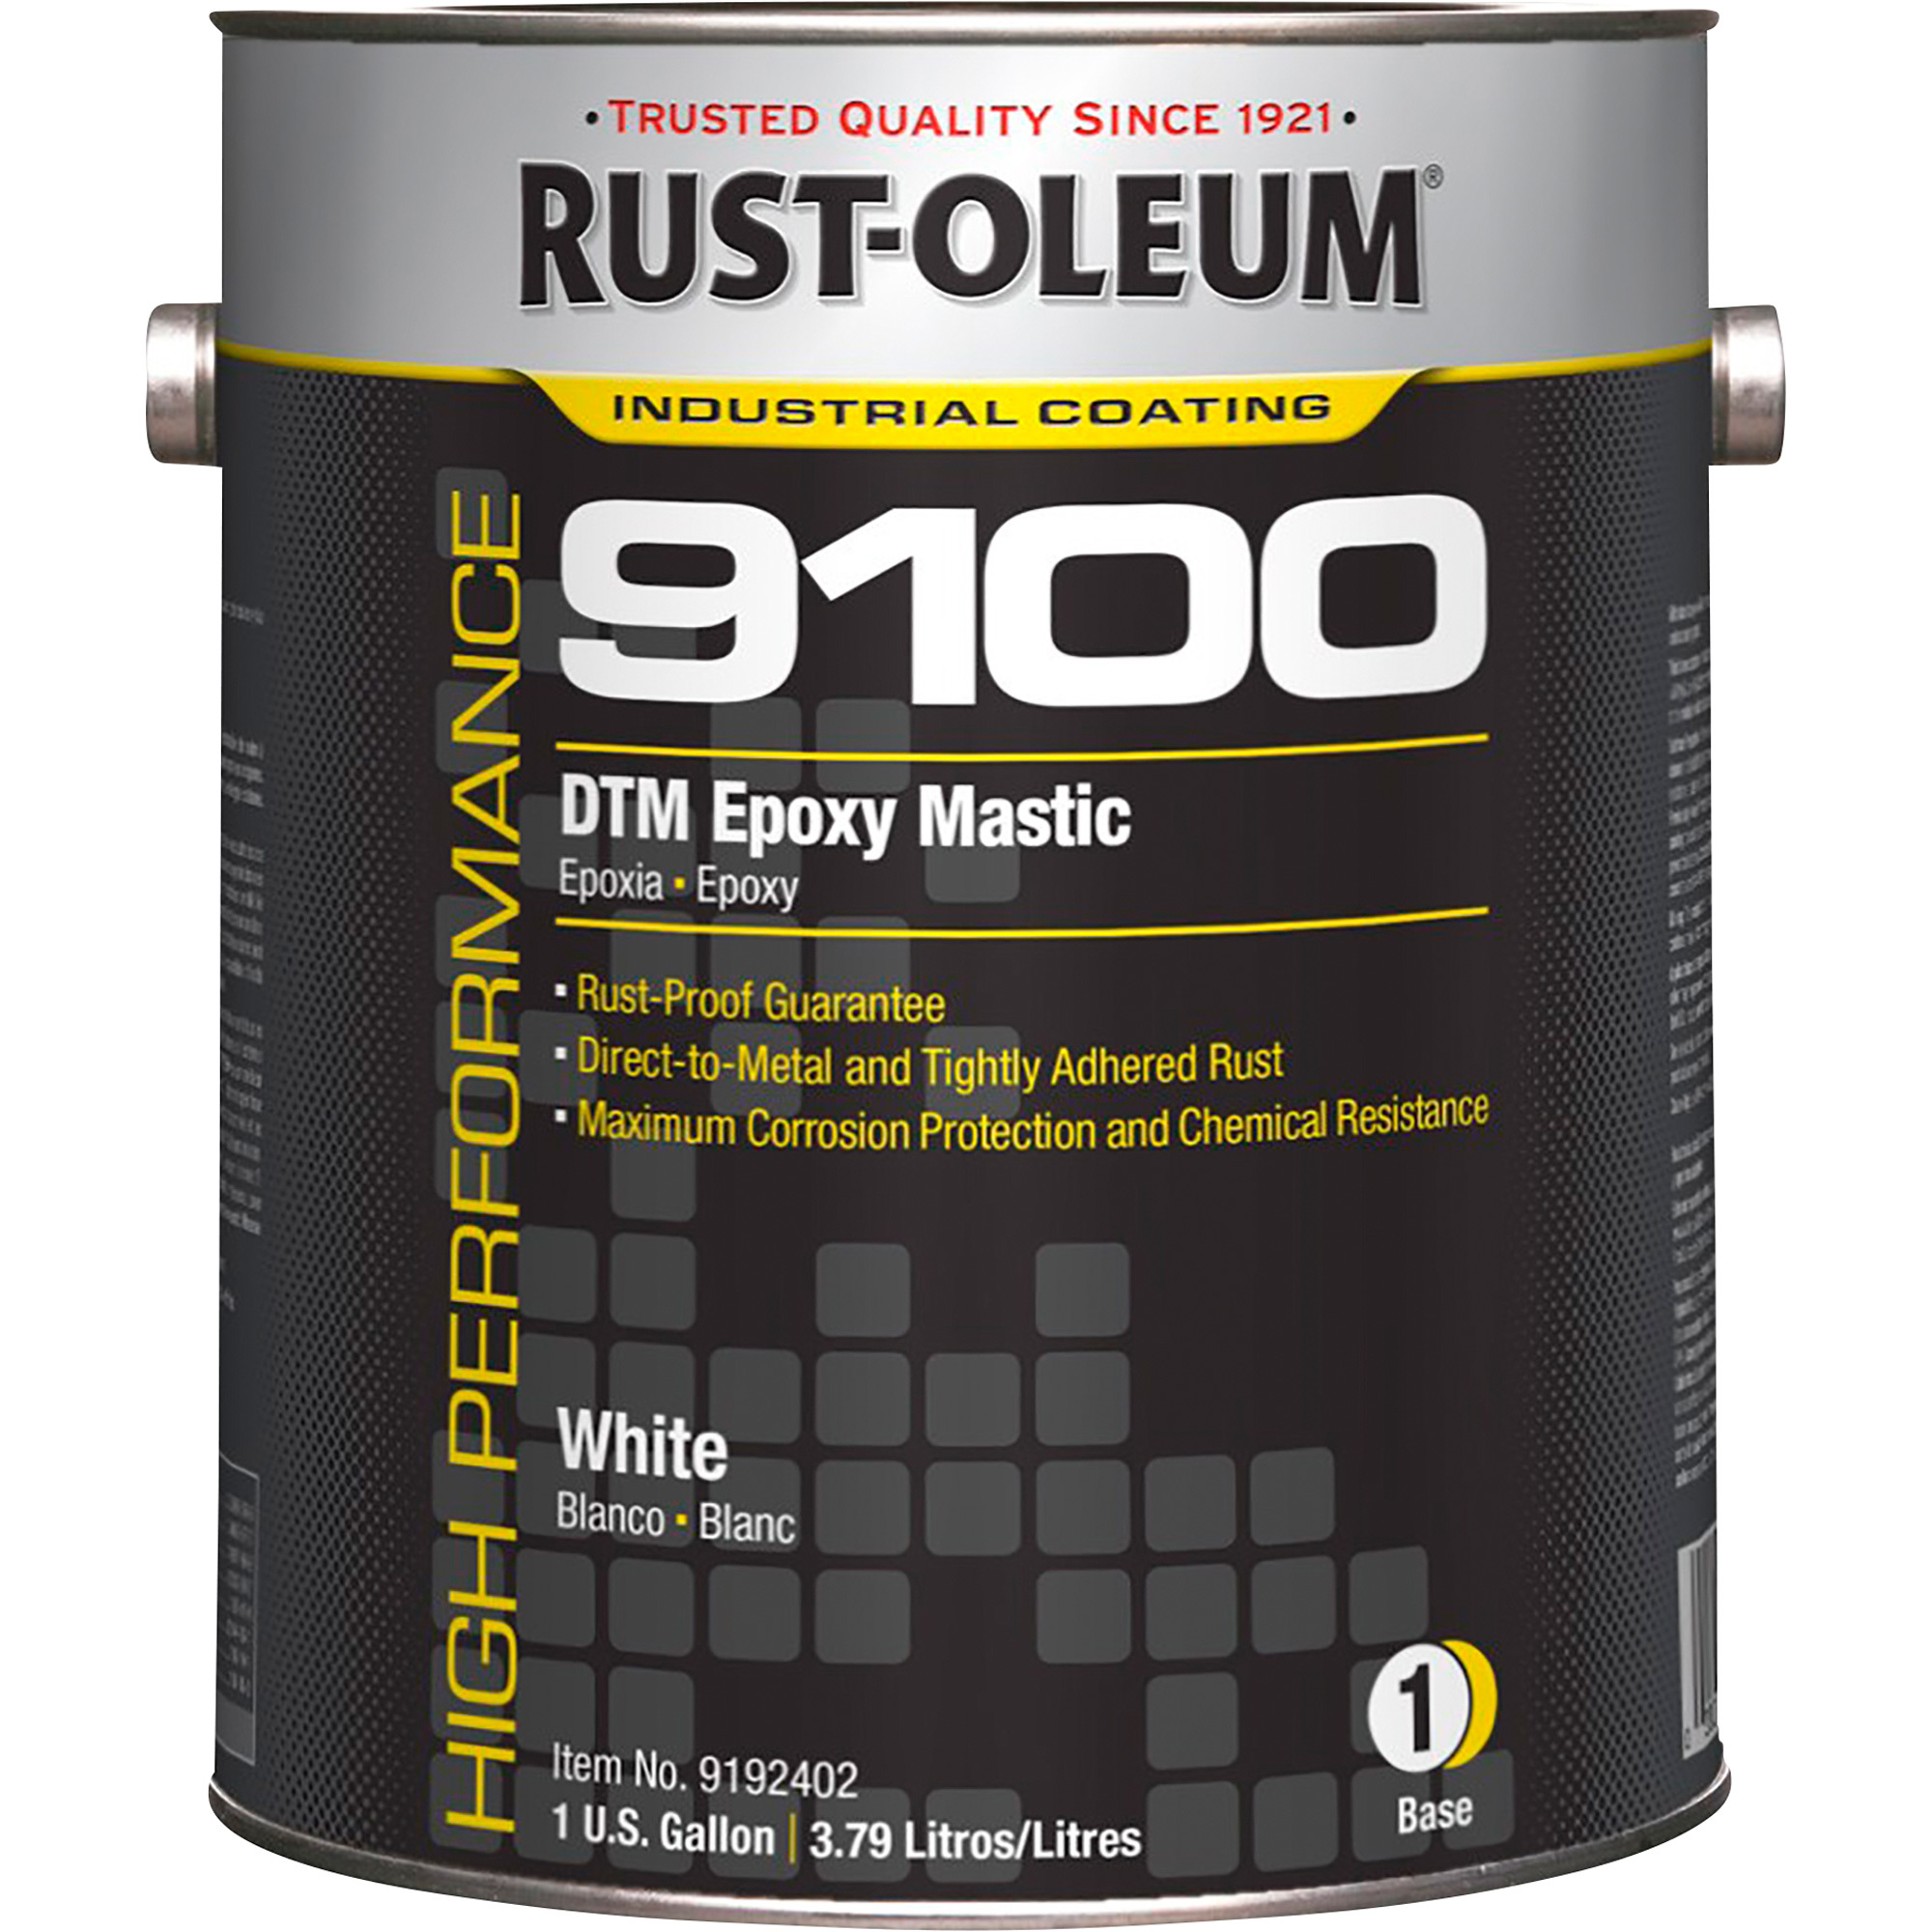 Rust-Oleum 9100 Epoxy, (1) 5-Gallon Pail, White